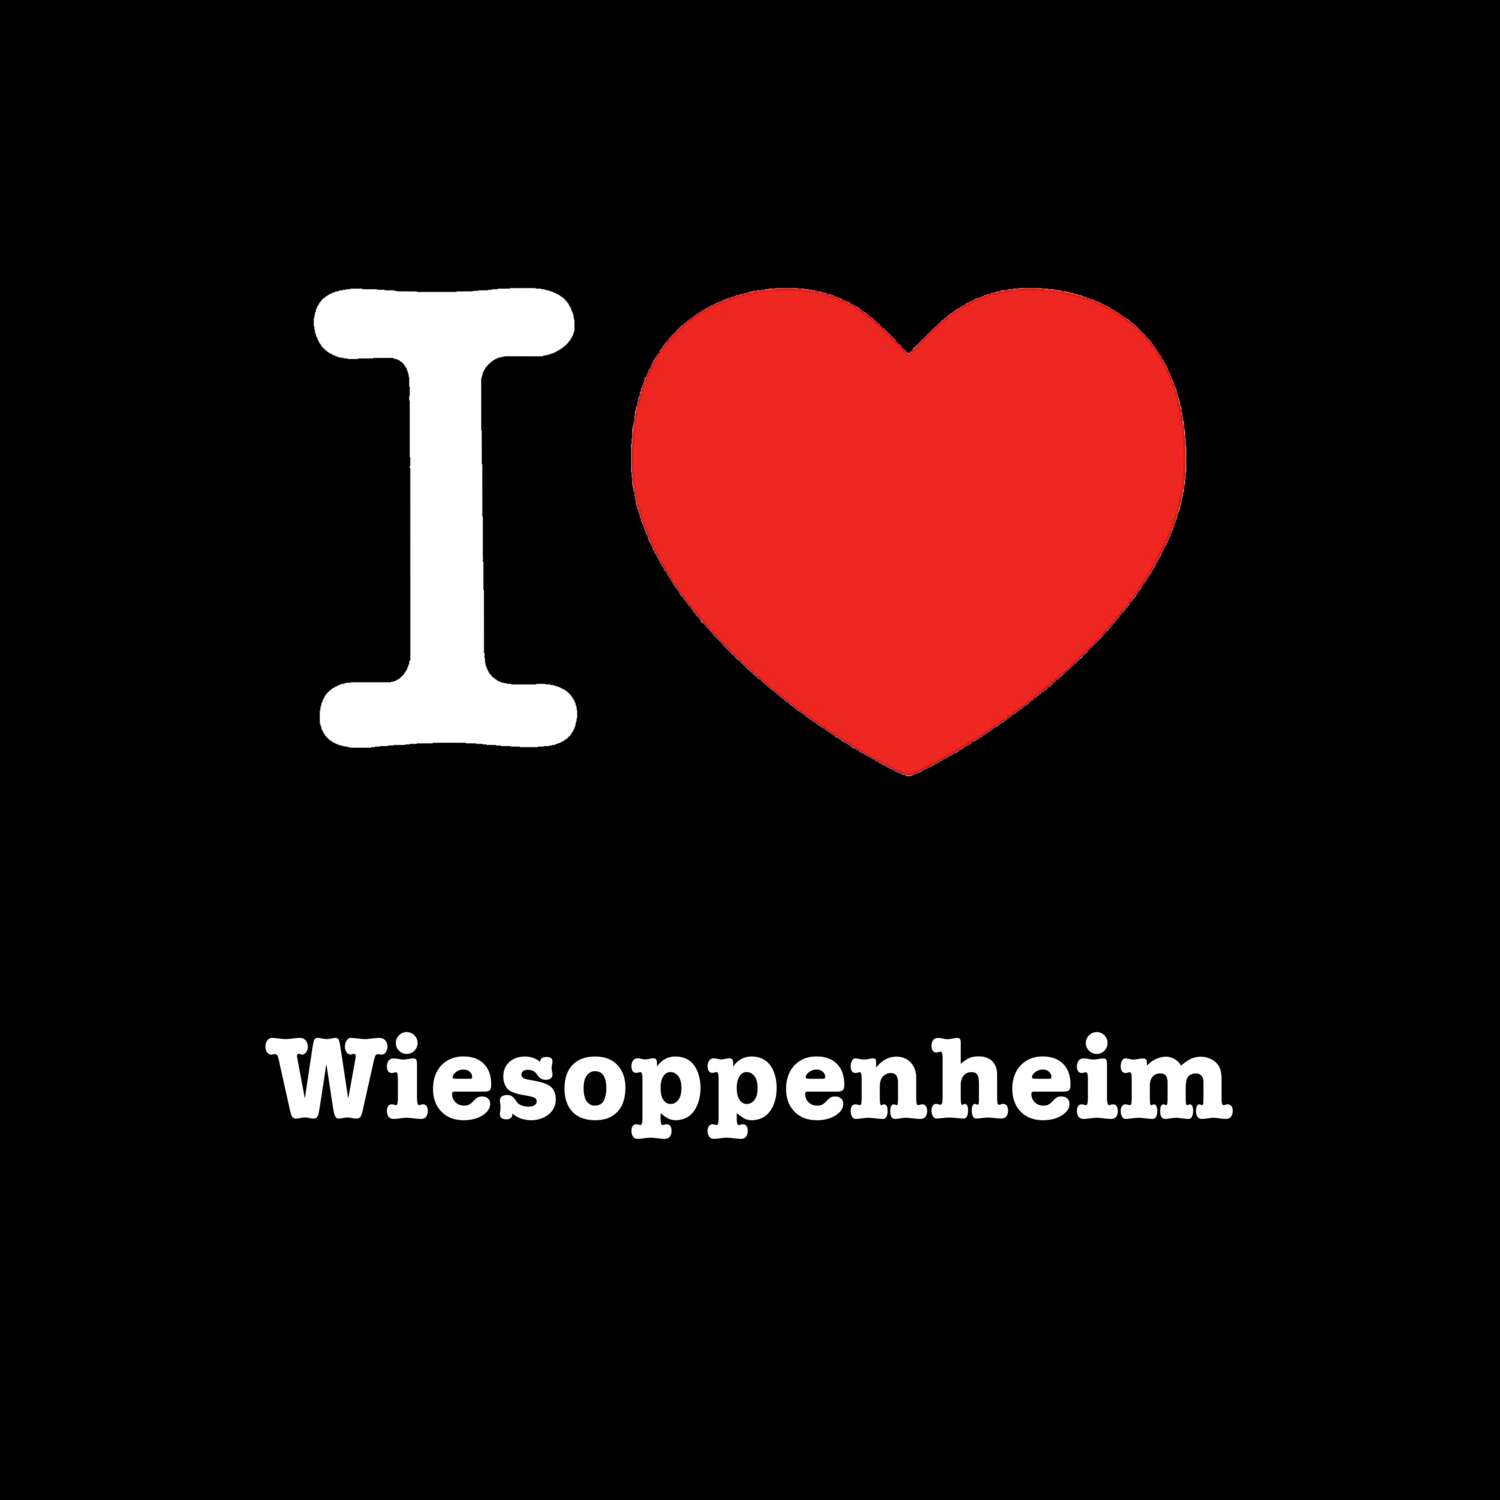 Wiesoppenheim T-Shirt »I love«